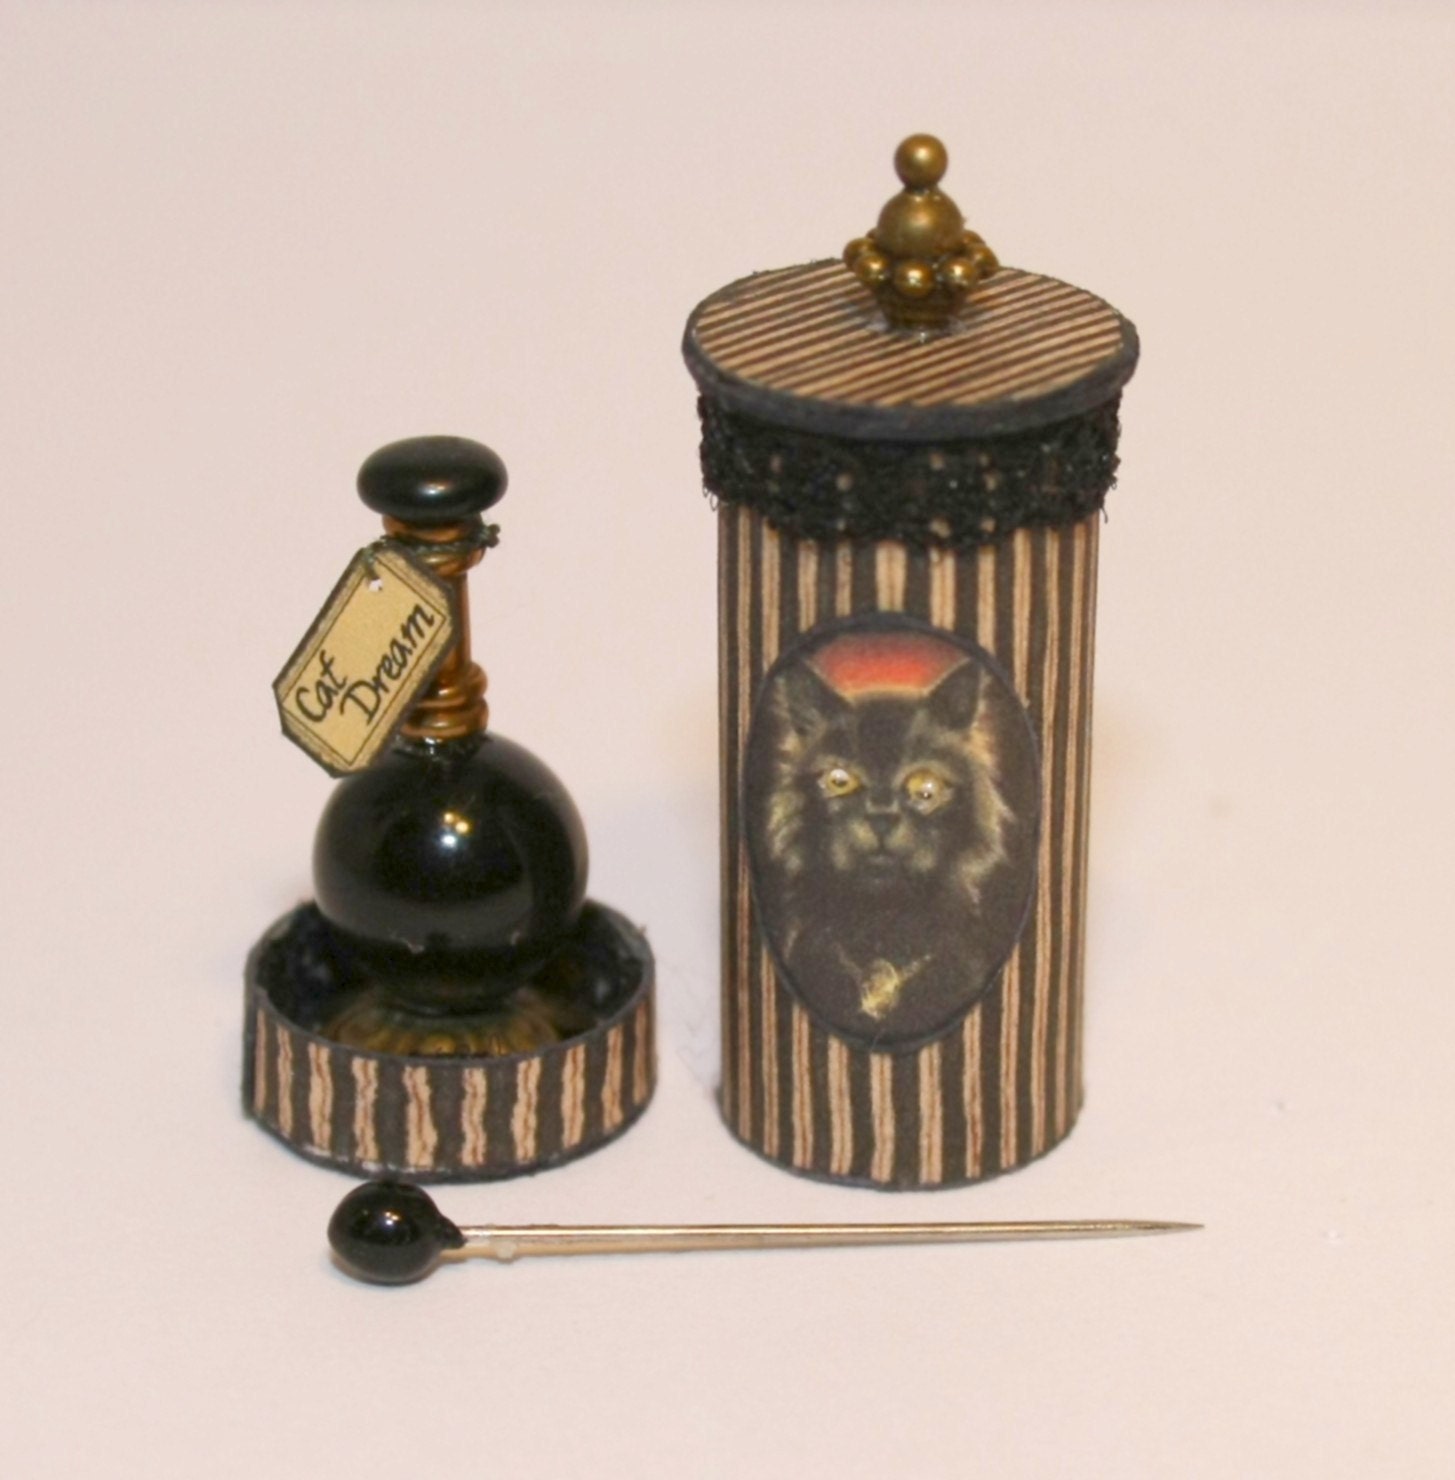 CDHM Artisan Manuela Herbst of Scarlett's Zauberhafte Miniaturen dollhouse miniature halloween, witch box 1:12 scale